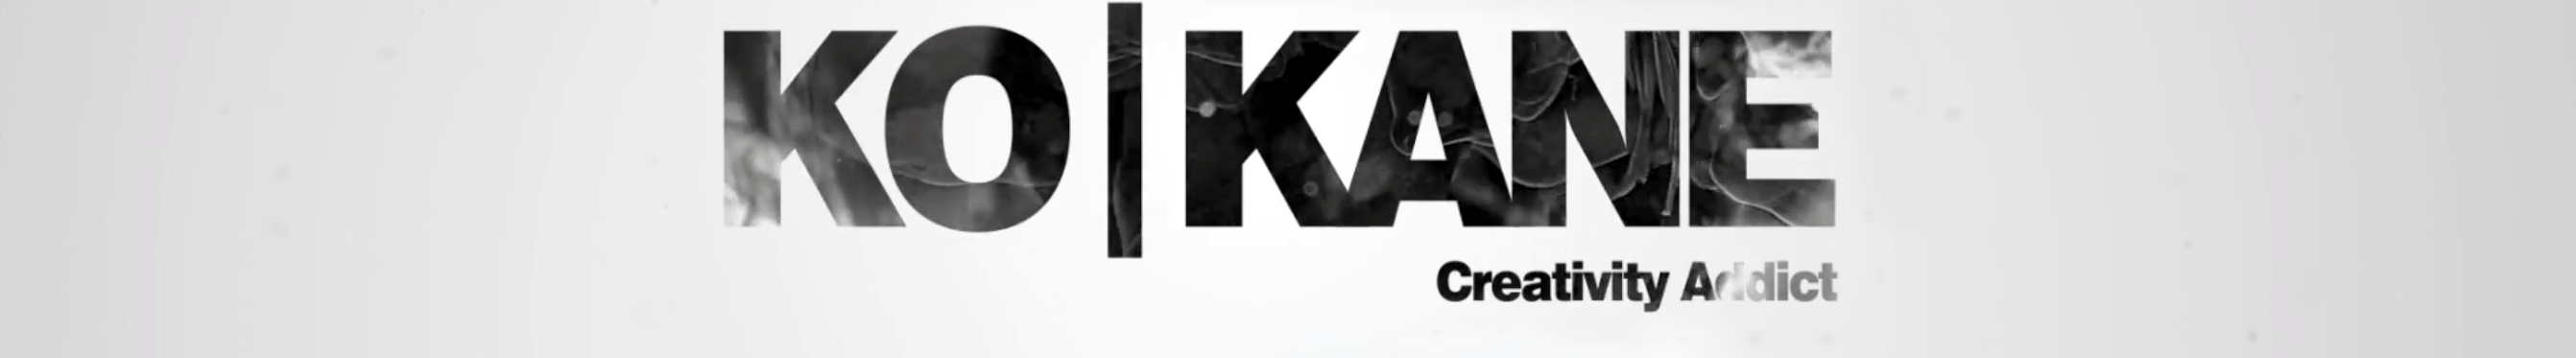 Profielbanner van Ko-Kane LLC